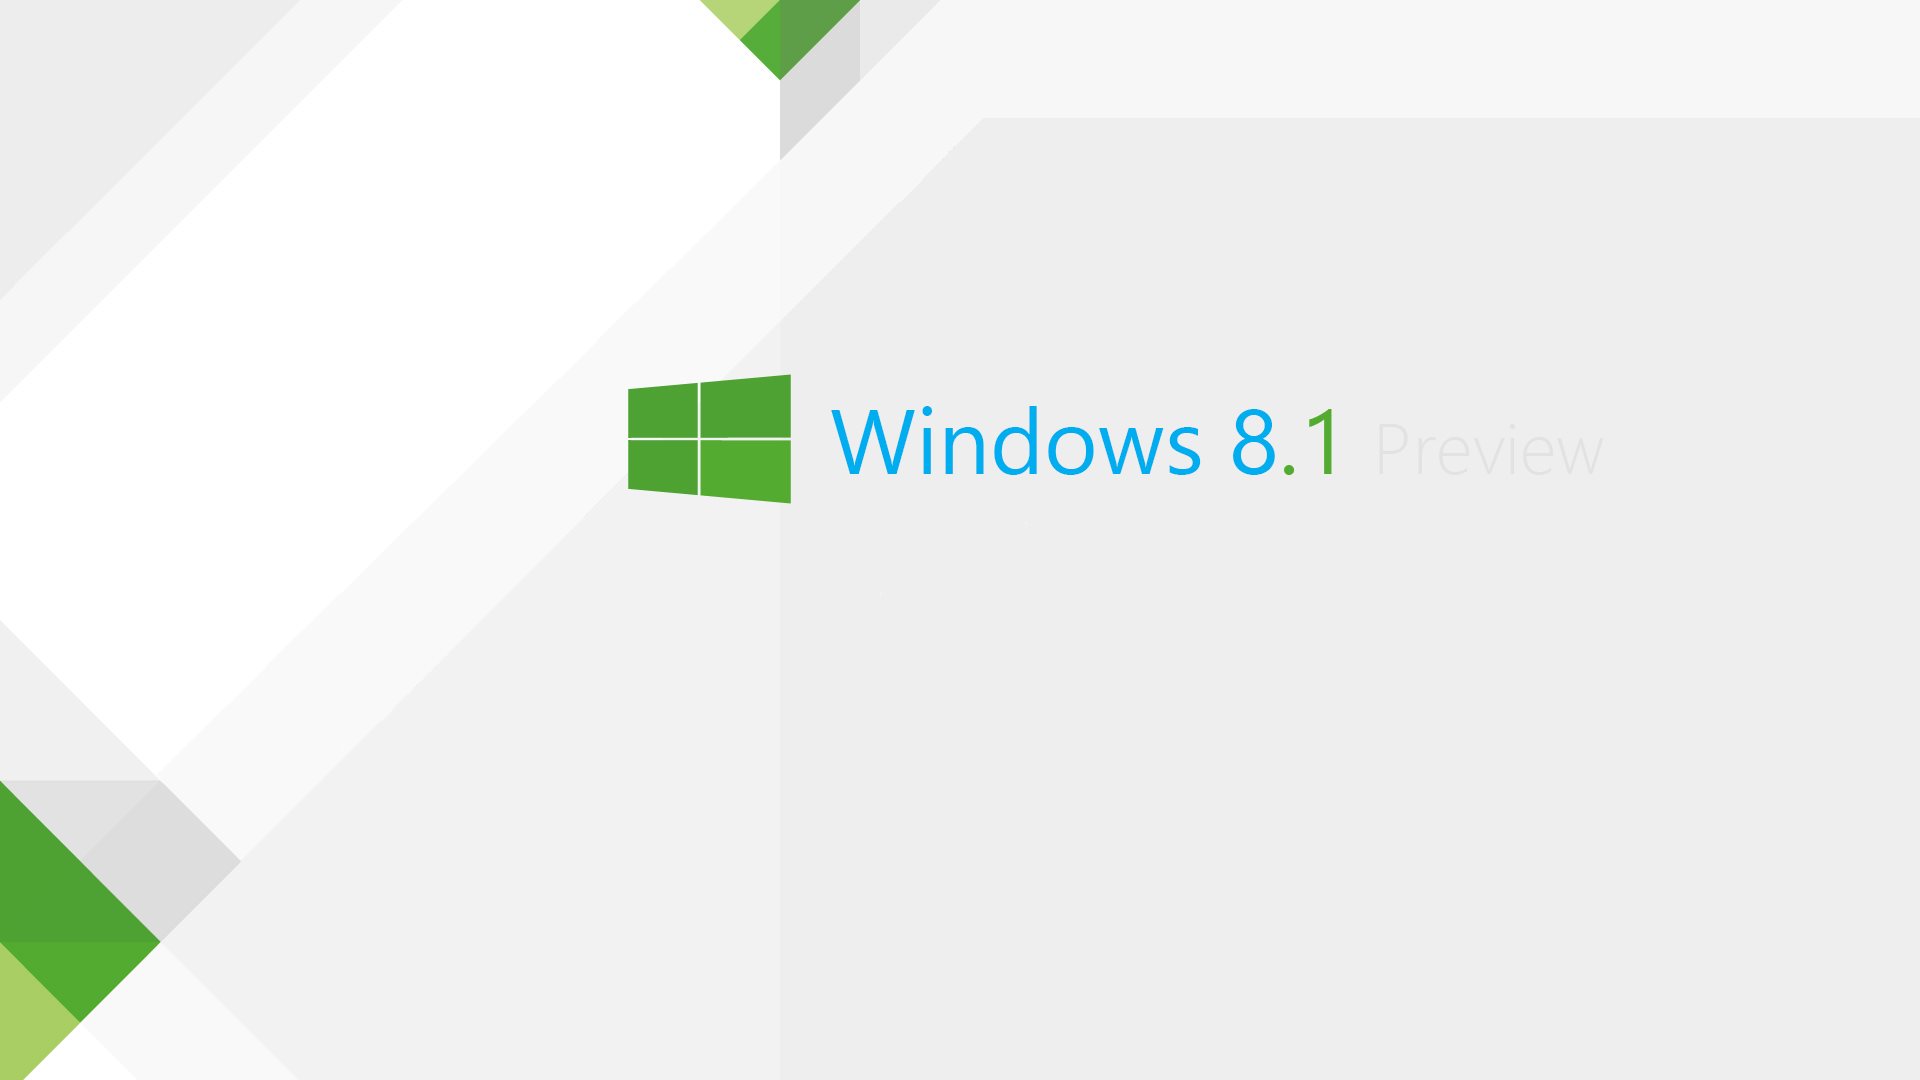 windows 8.1 wallpaper,green,text,product,logo,line